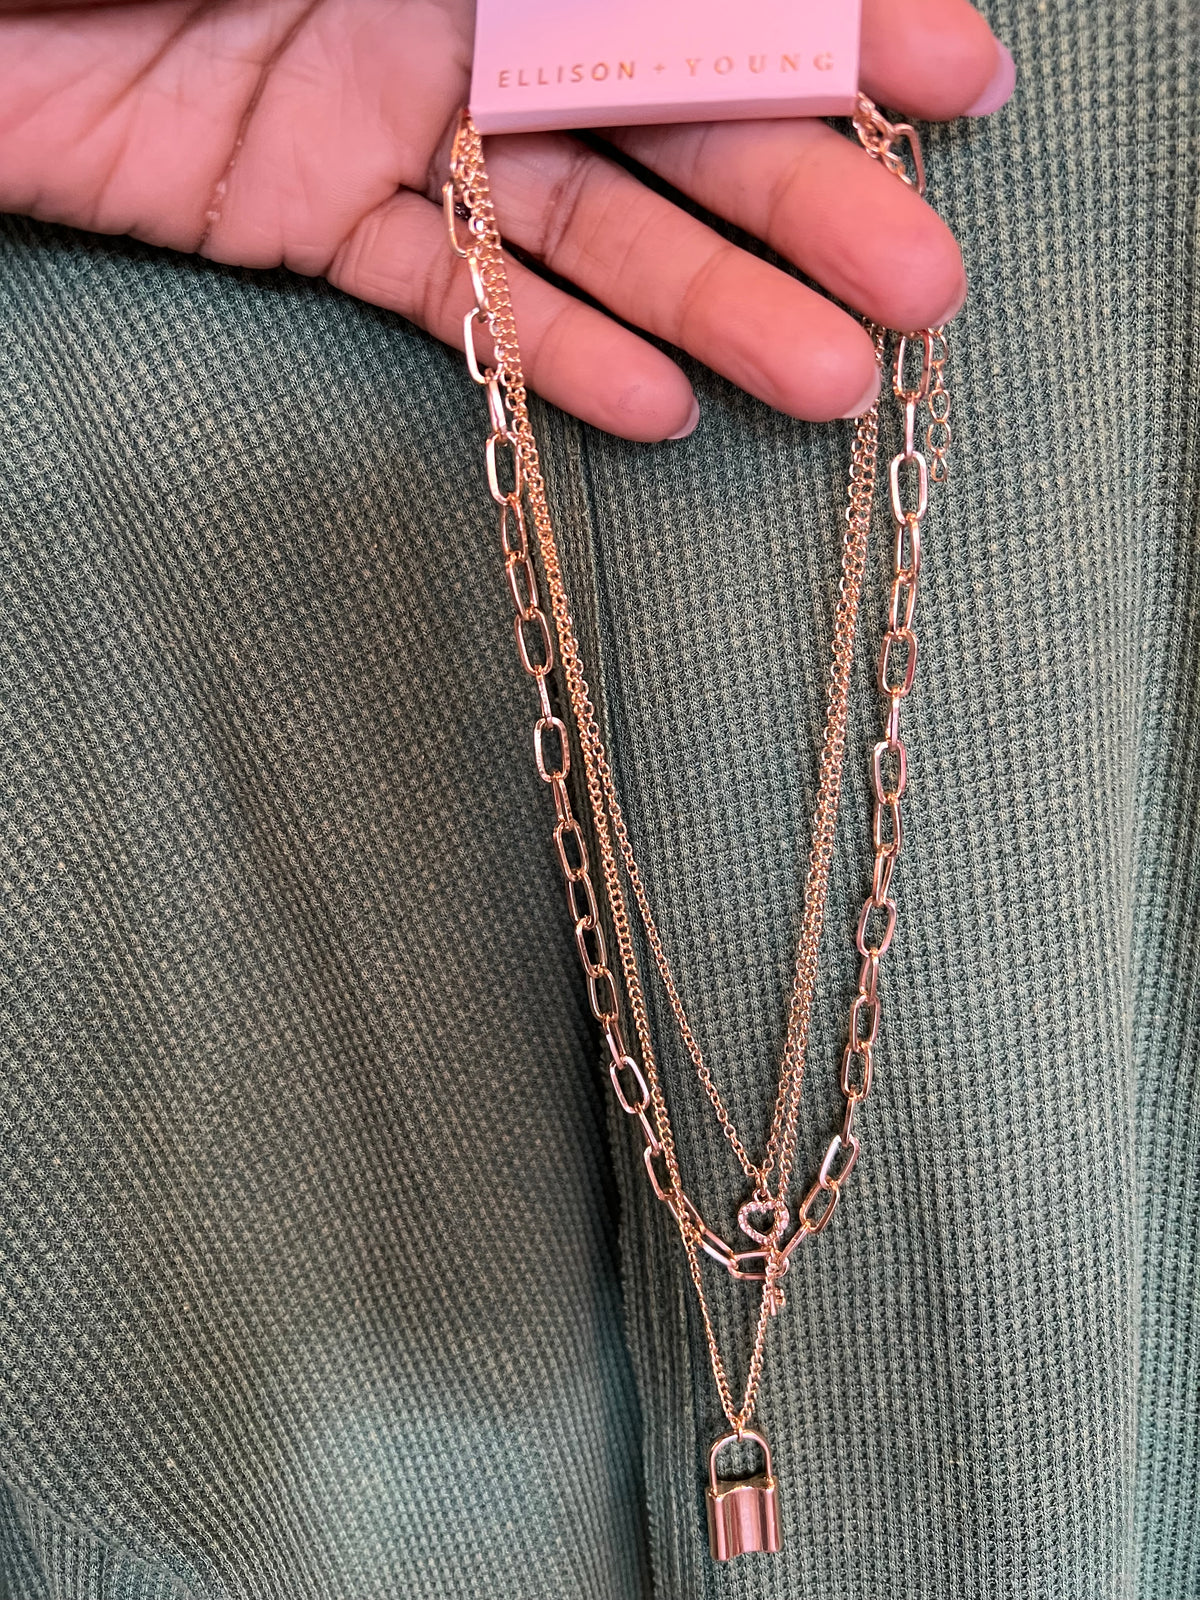 Locket/Key Necklace